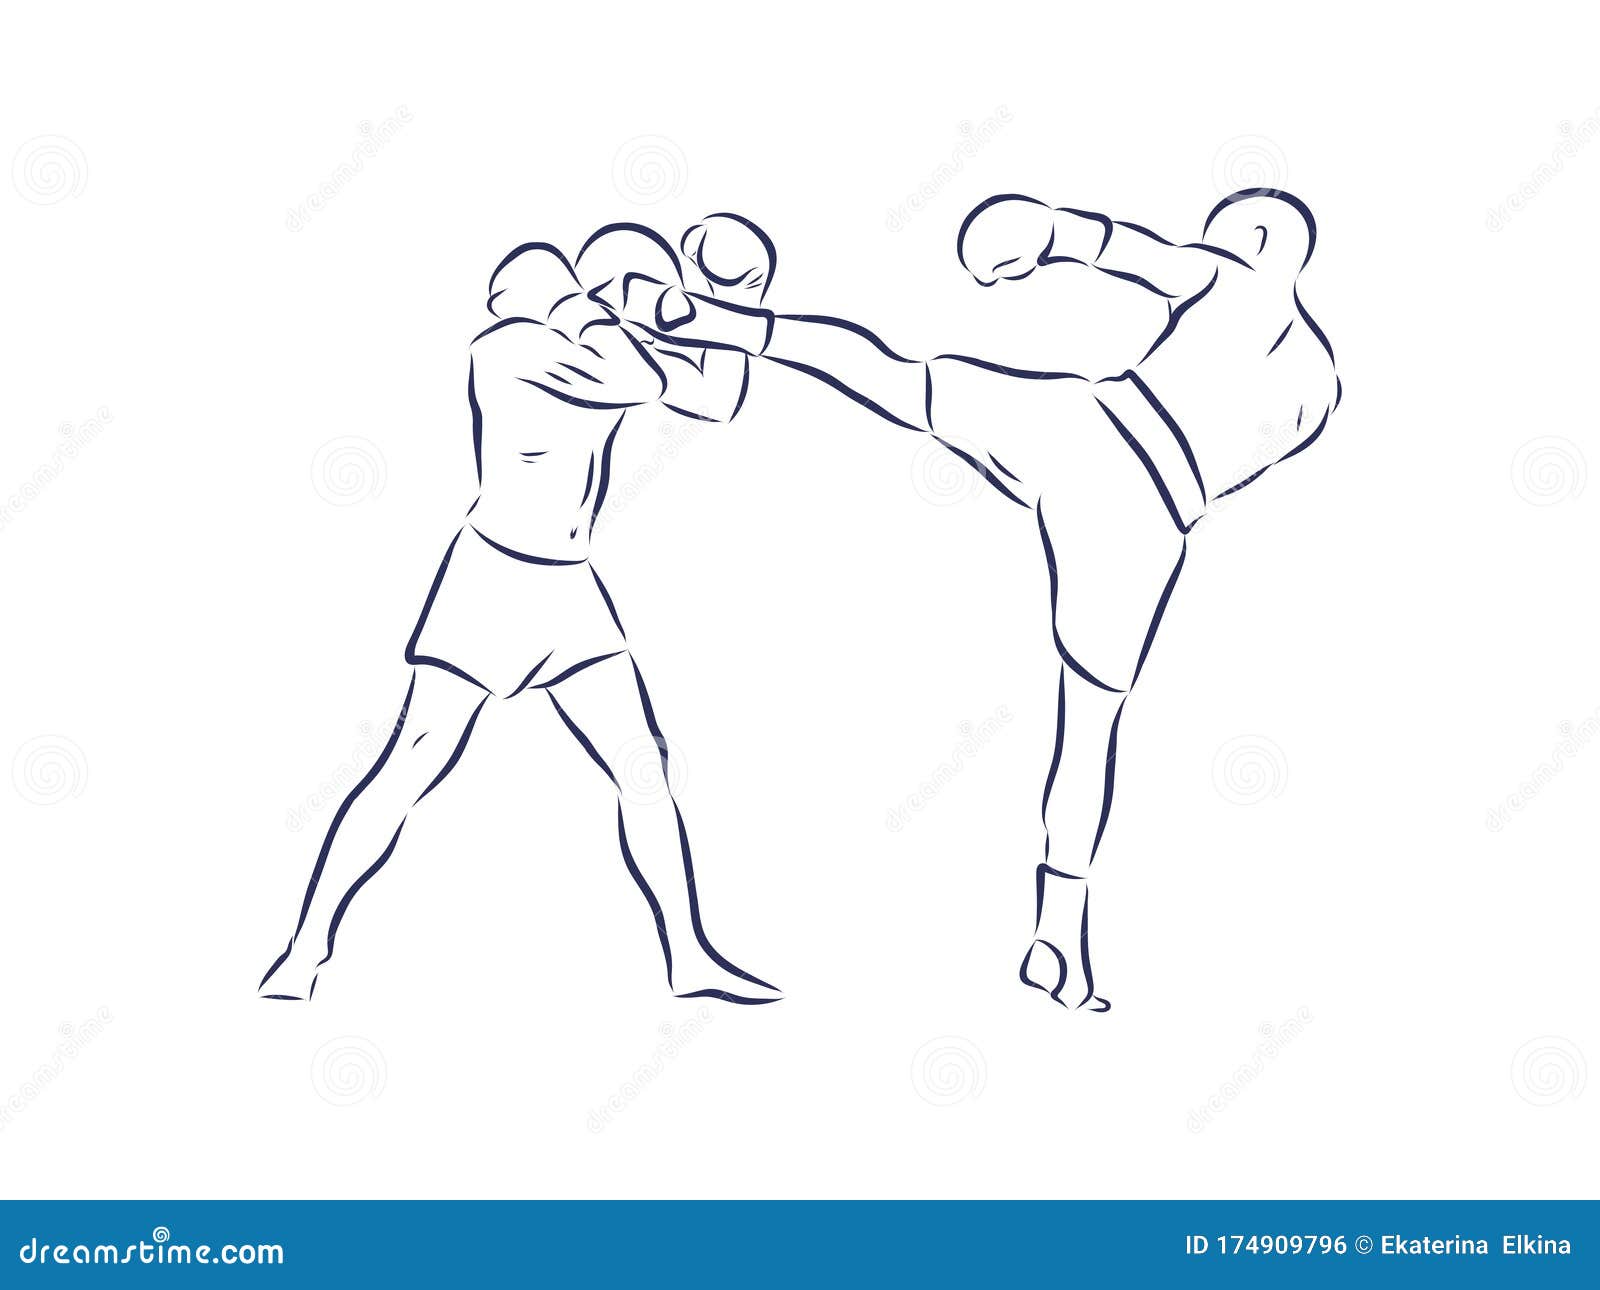 11532 Boxing Sketch Images Stock Photos  Vectors  Shutterstock